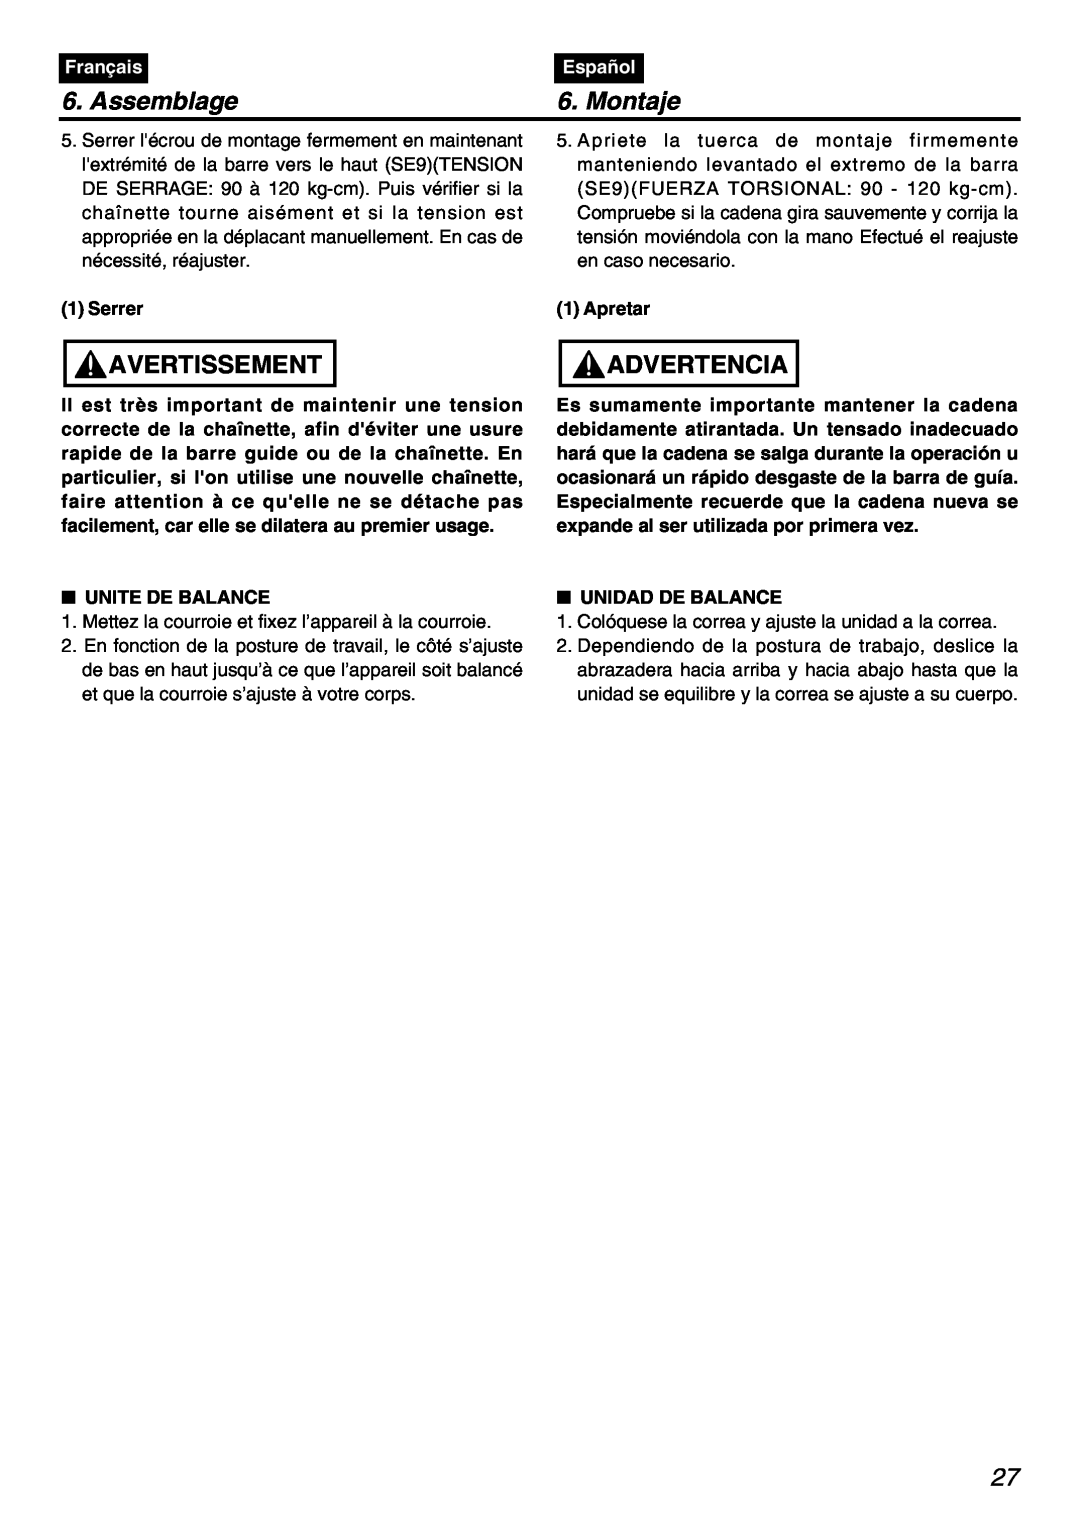 Zenoah PSZ2401 manual Assemblage, Montaje, Avertissement, Advertencia, Français, Español 